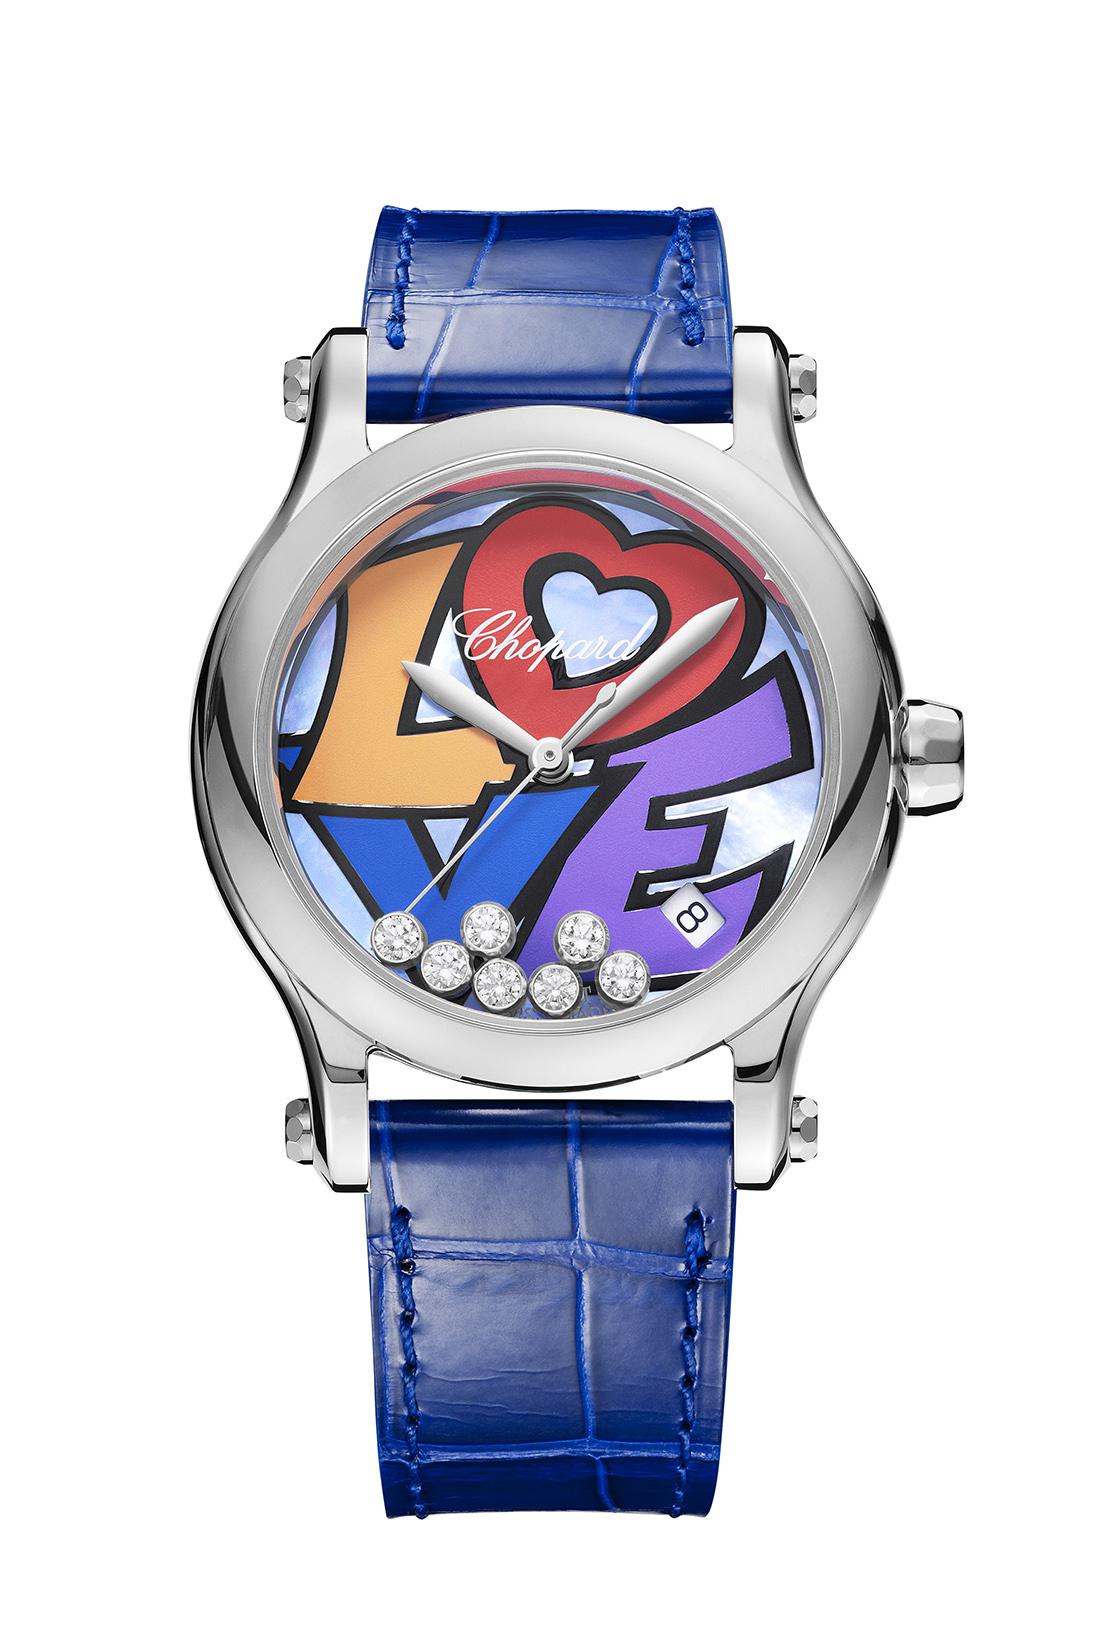 Часы Happy Love, Chopard, 1 144 800 руб. (Mercury)